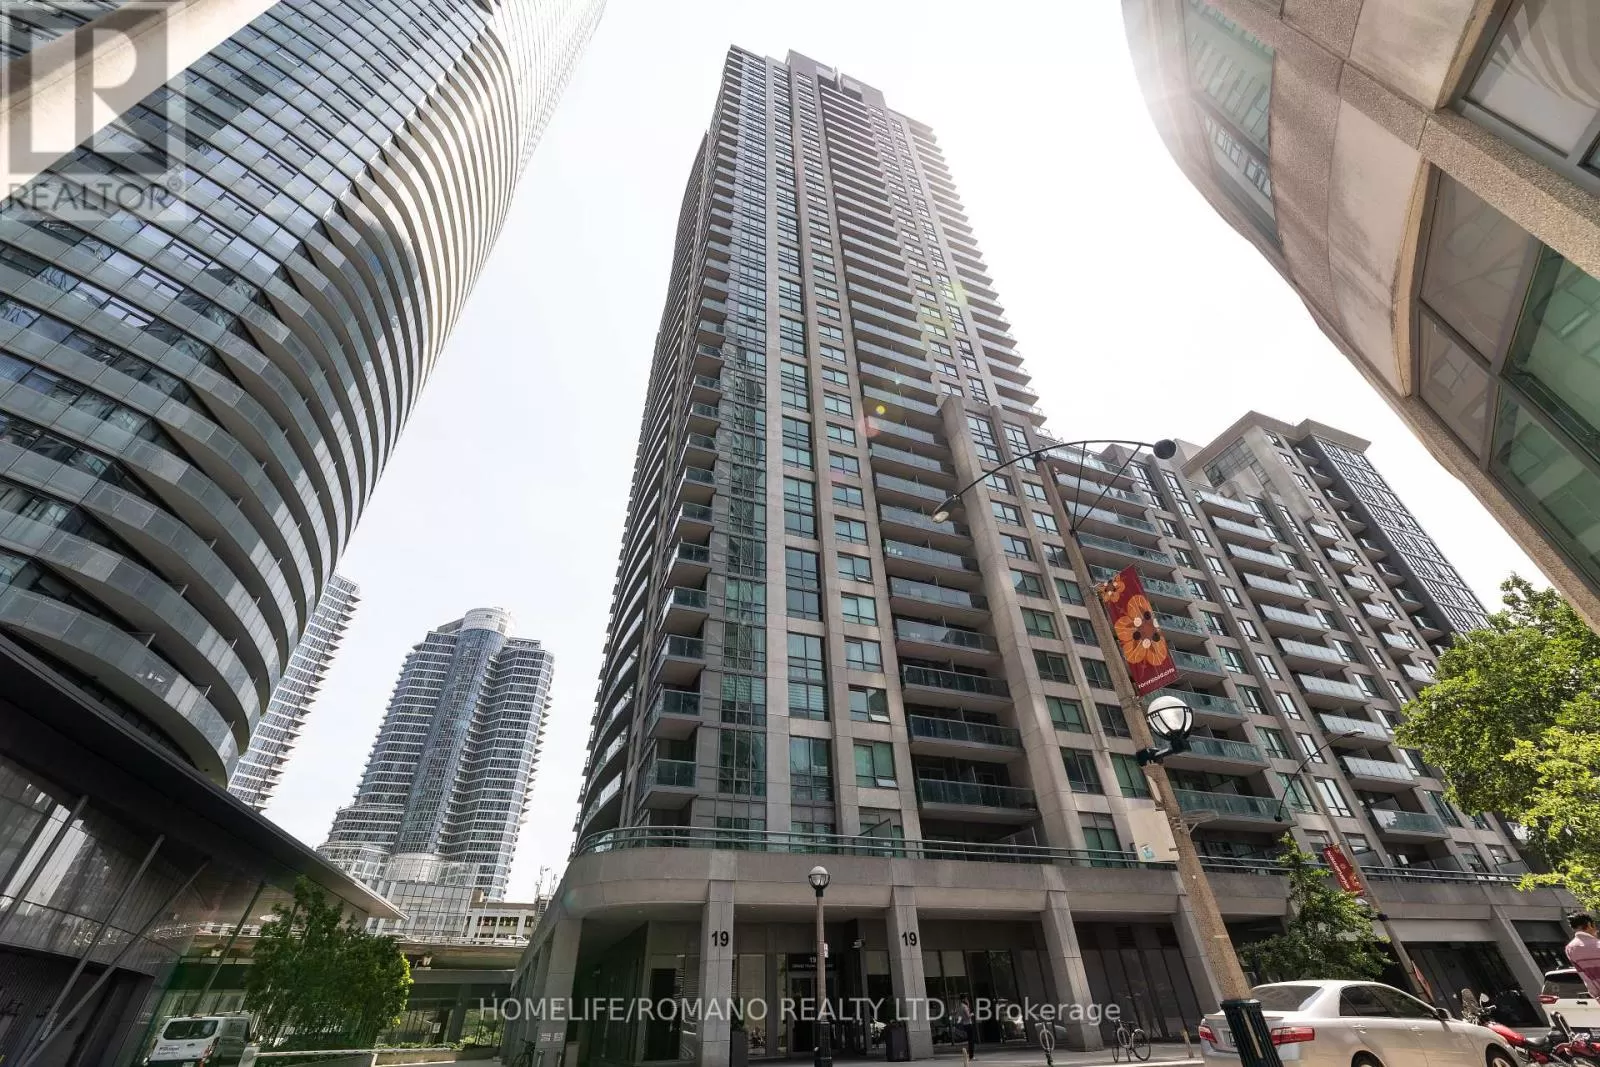 Apartment for rent: 1202 - 19 Grand Trunk Crescent, Toronto, Ontario M5J 3A3